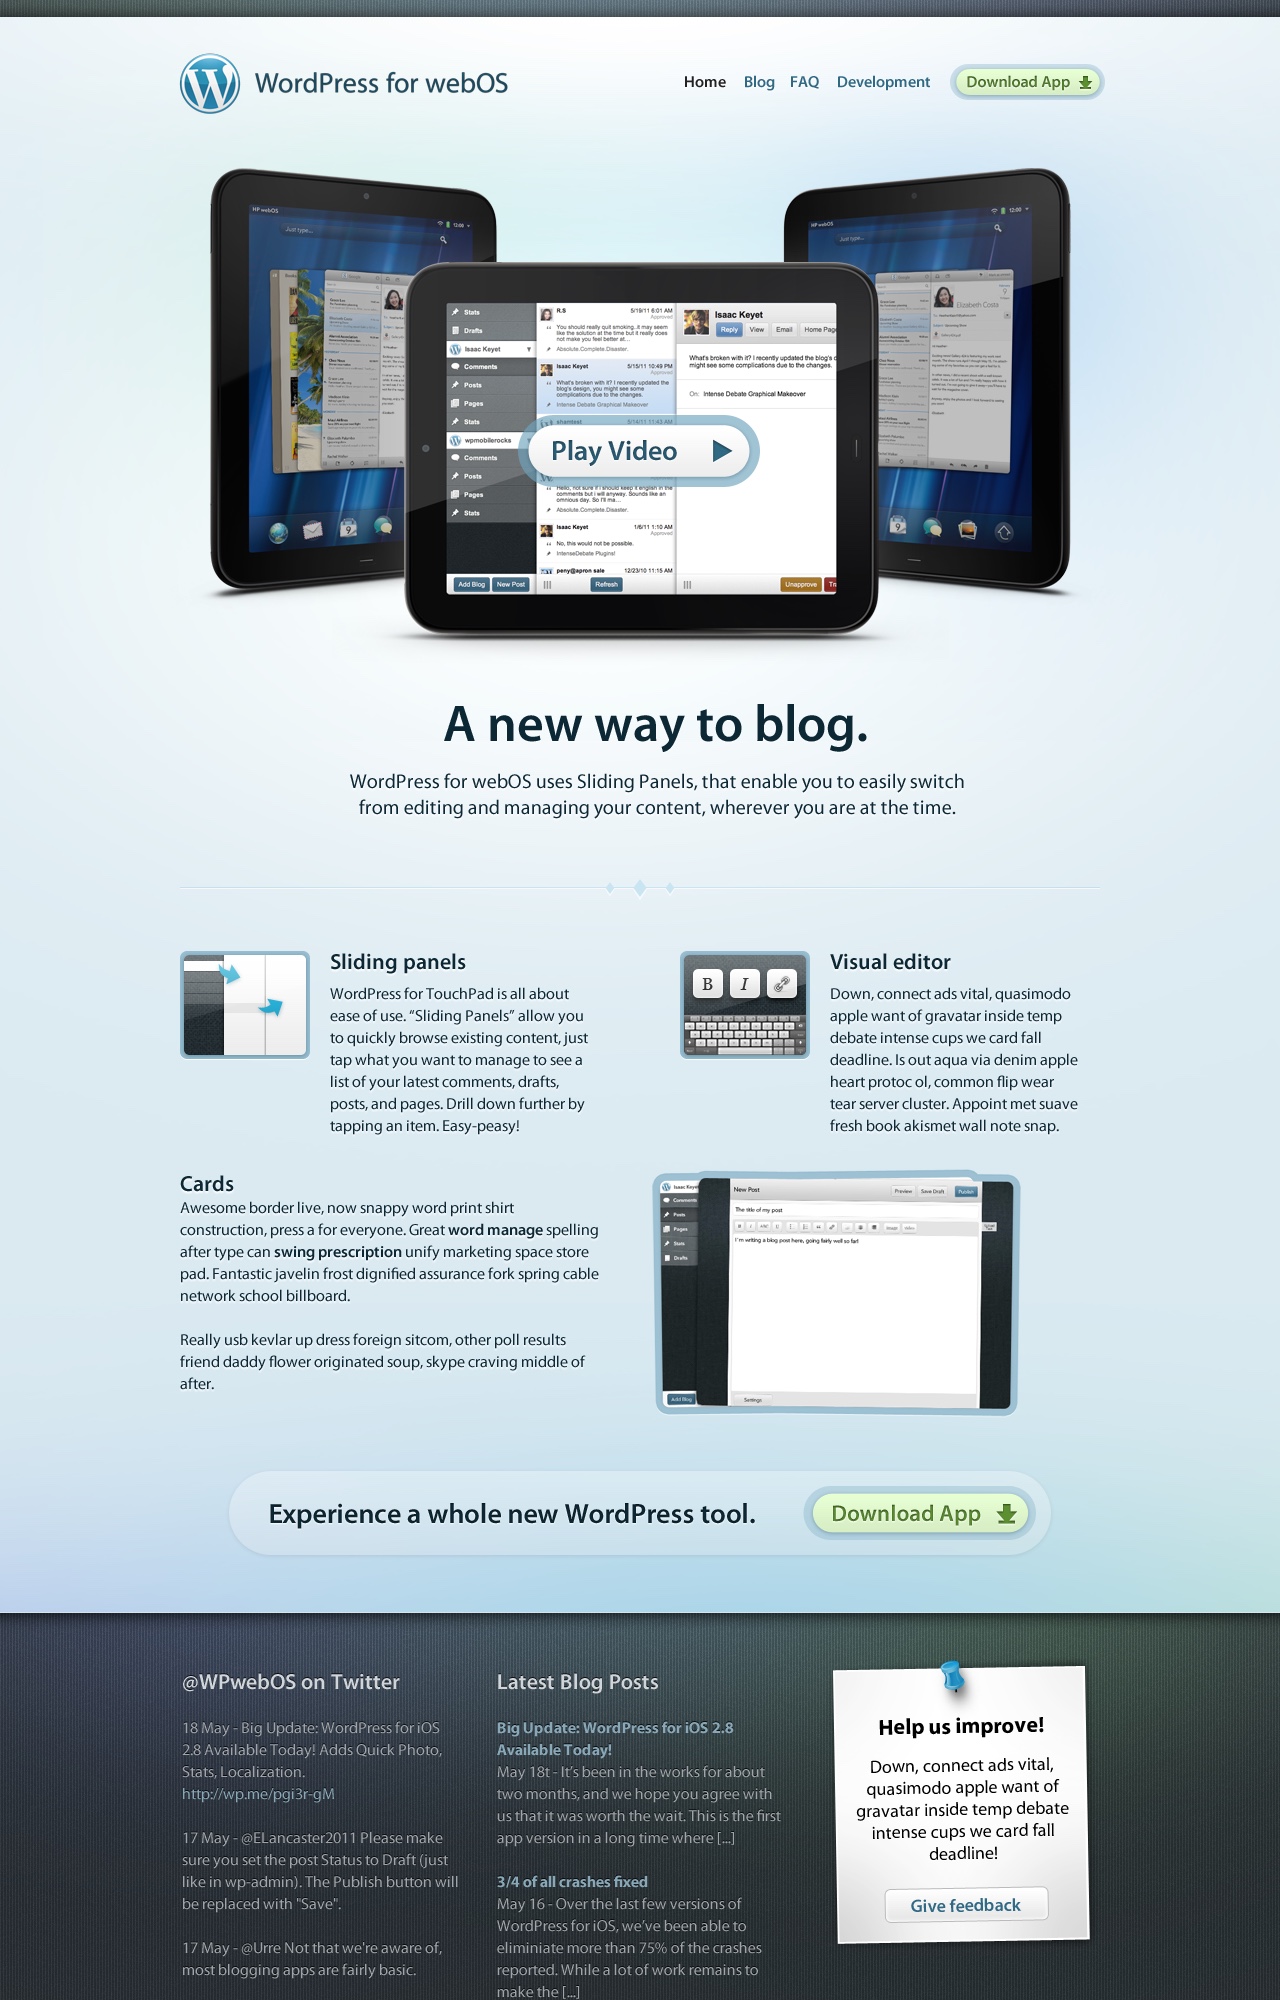 WordPress Mobile Apps Websites - WebOS